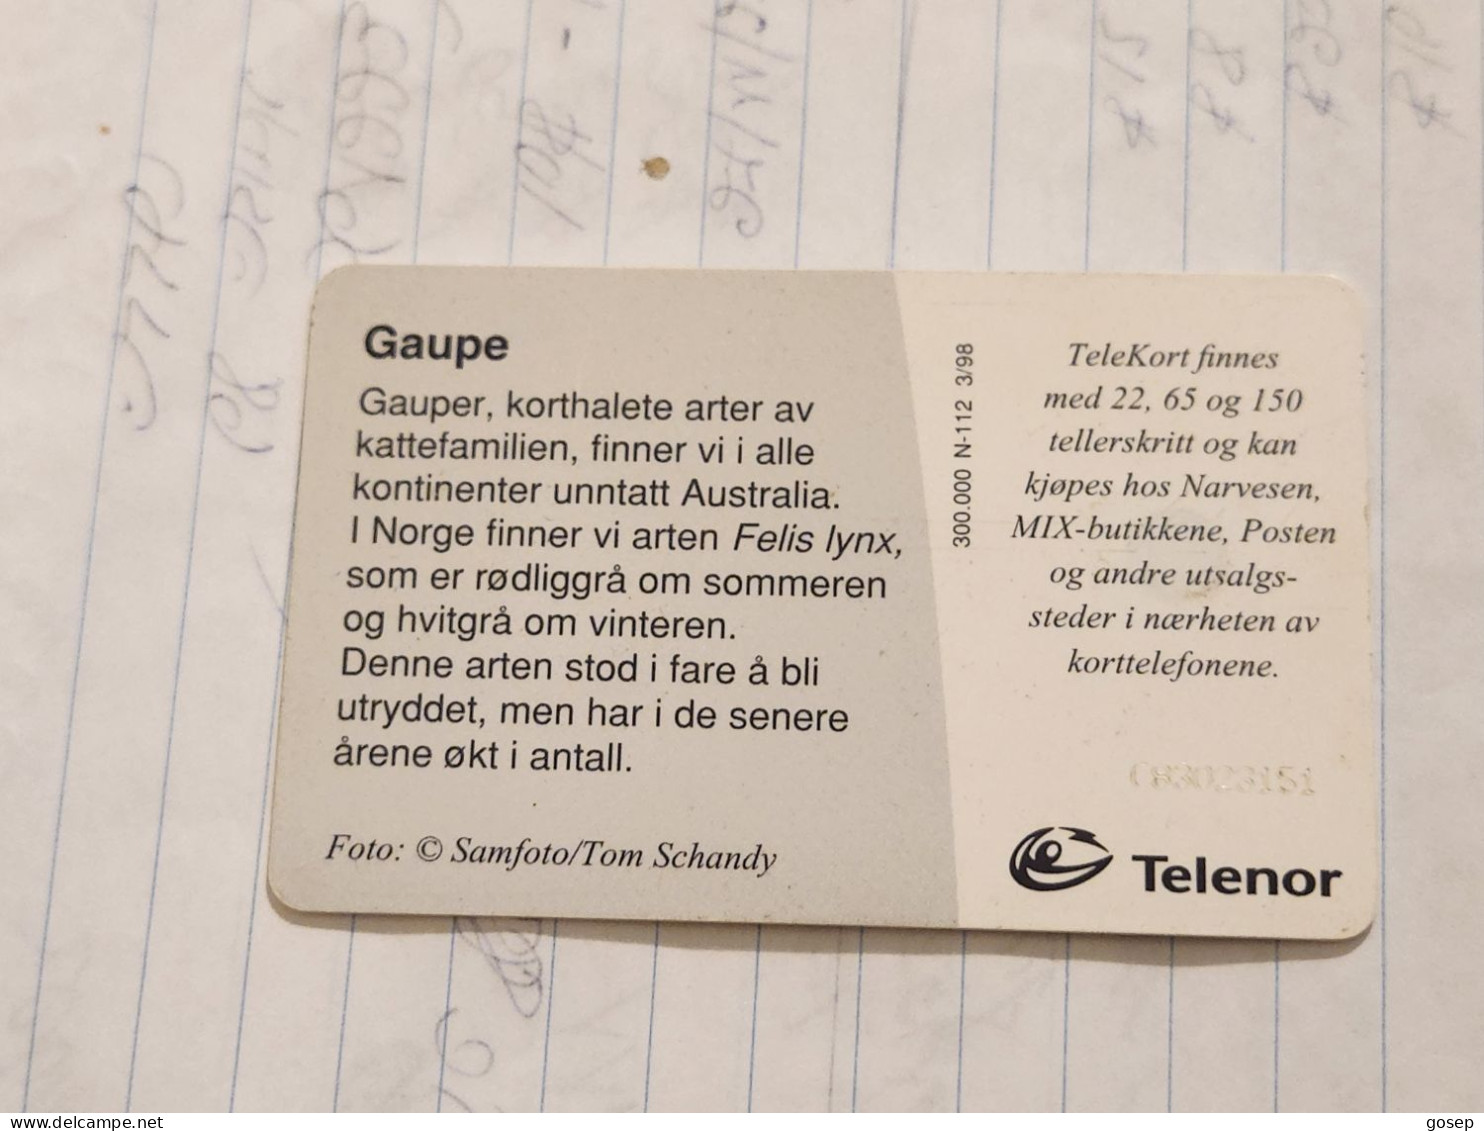 Norway-(N-112)-Gaupe / Lynx-(22 Tellerskritt)-(69)-(C83023151)-used Card+1card Prepiad Free - Norvegia